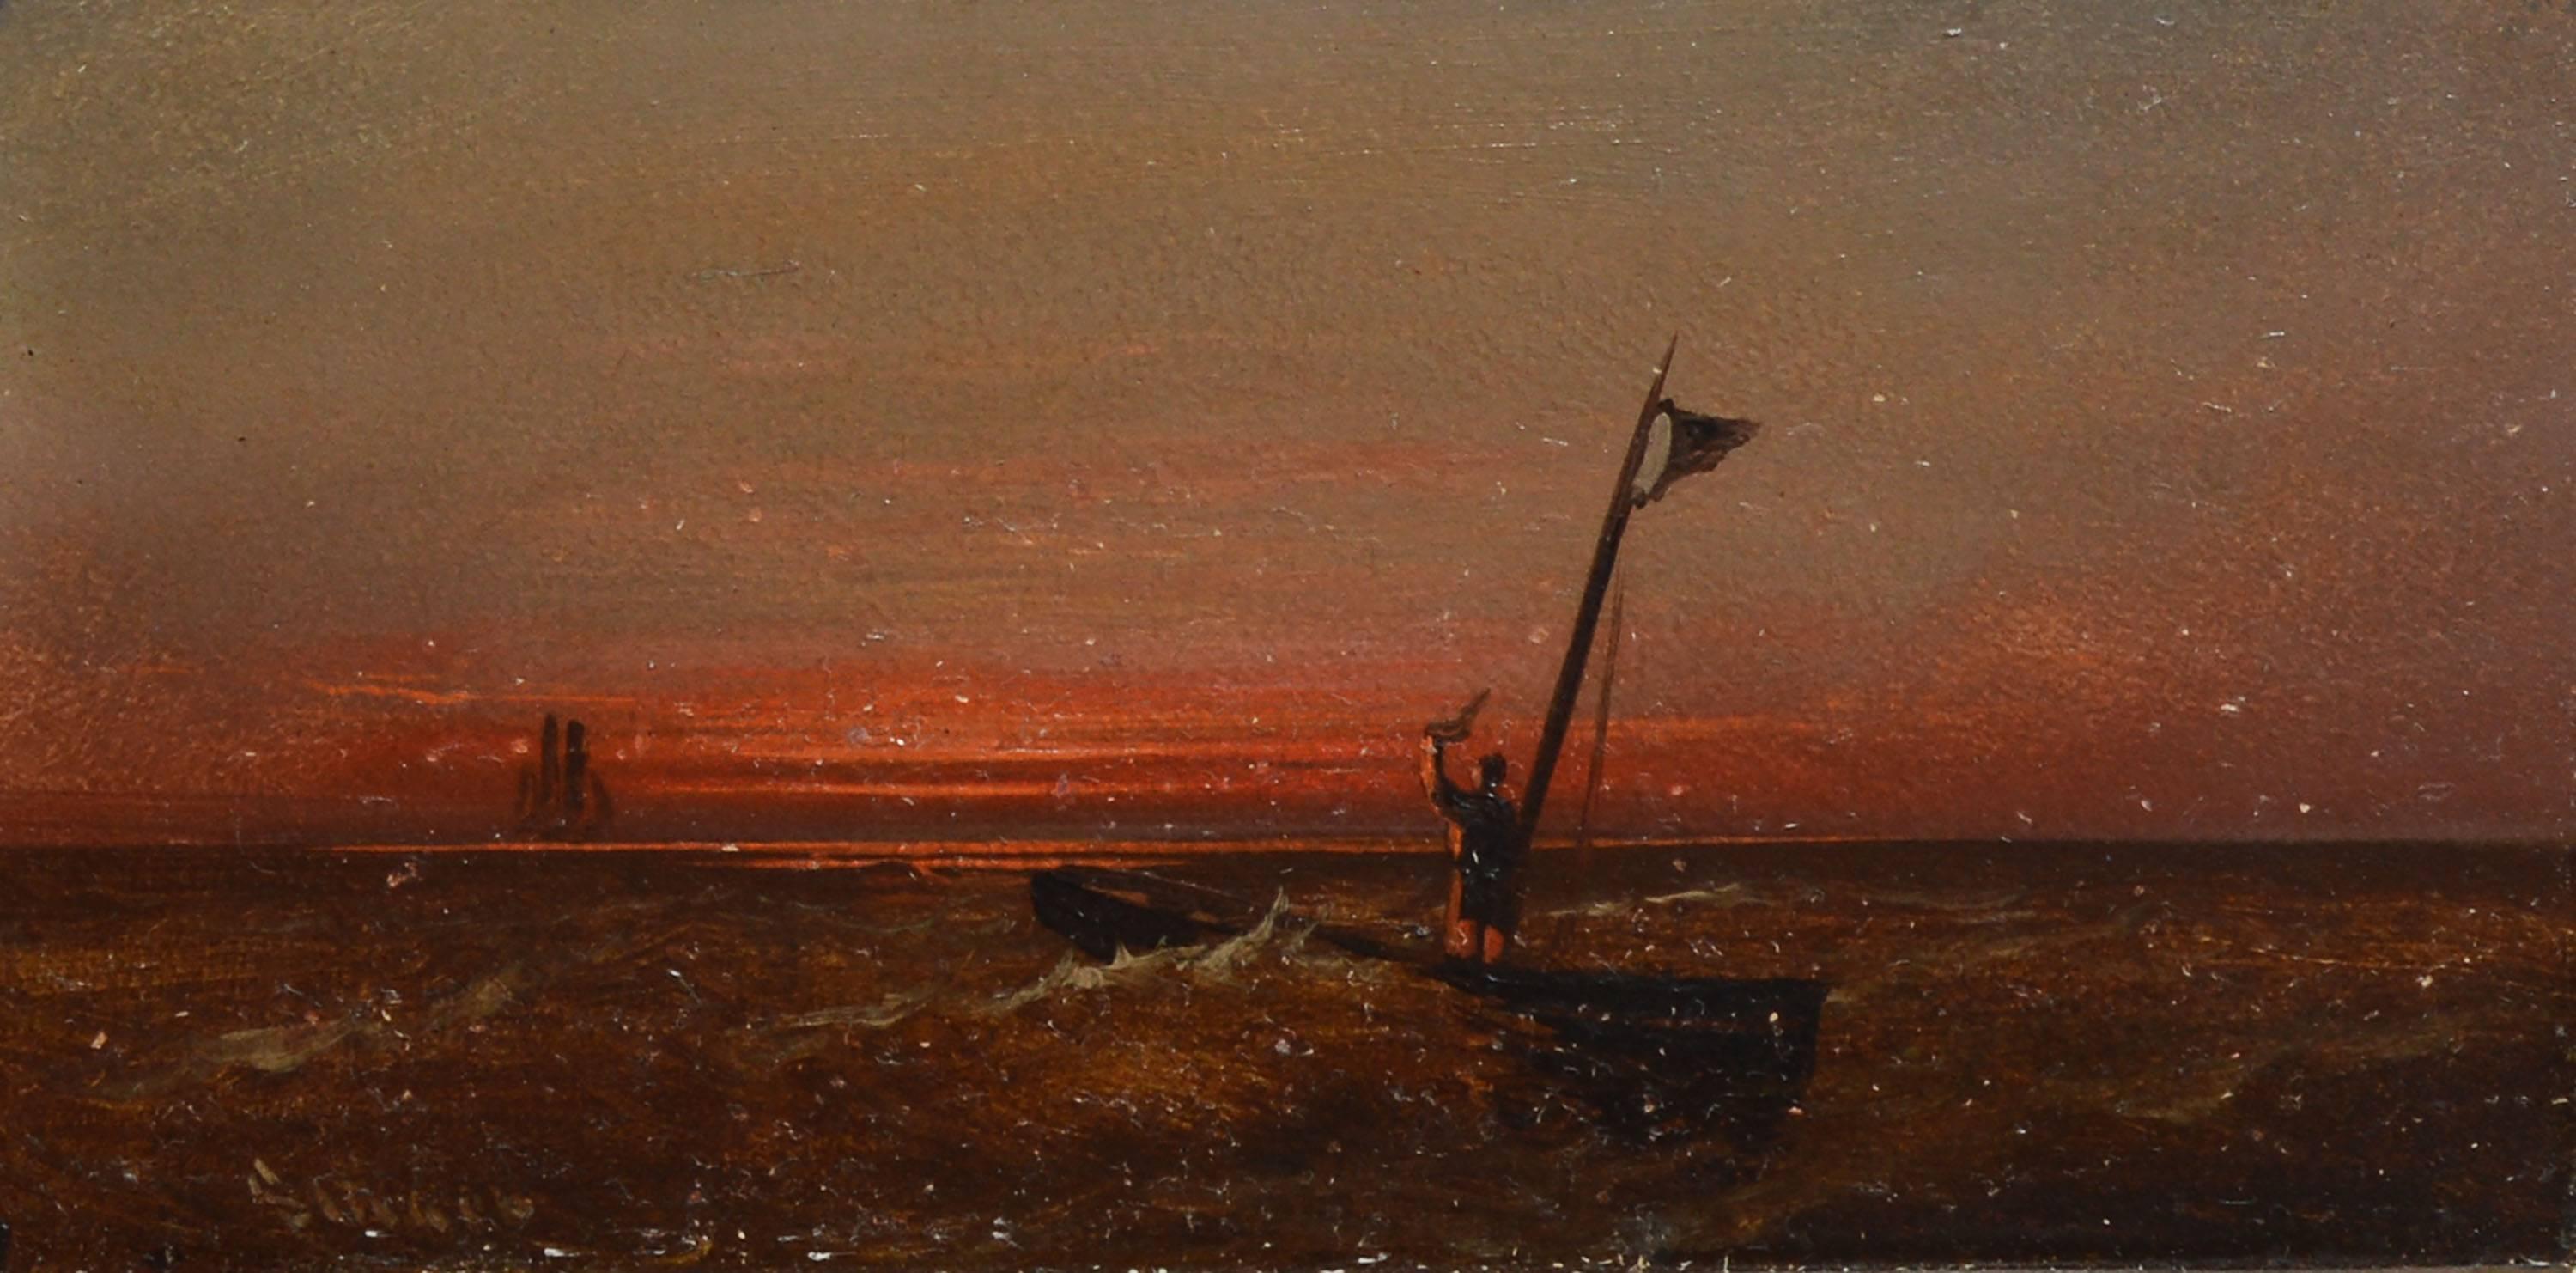 Sunset Sail by Alexander Charles Stuart 2